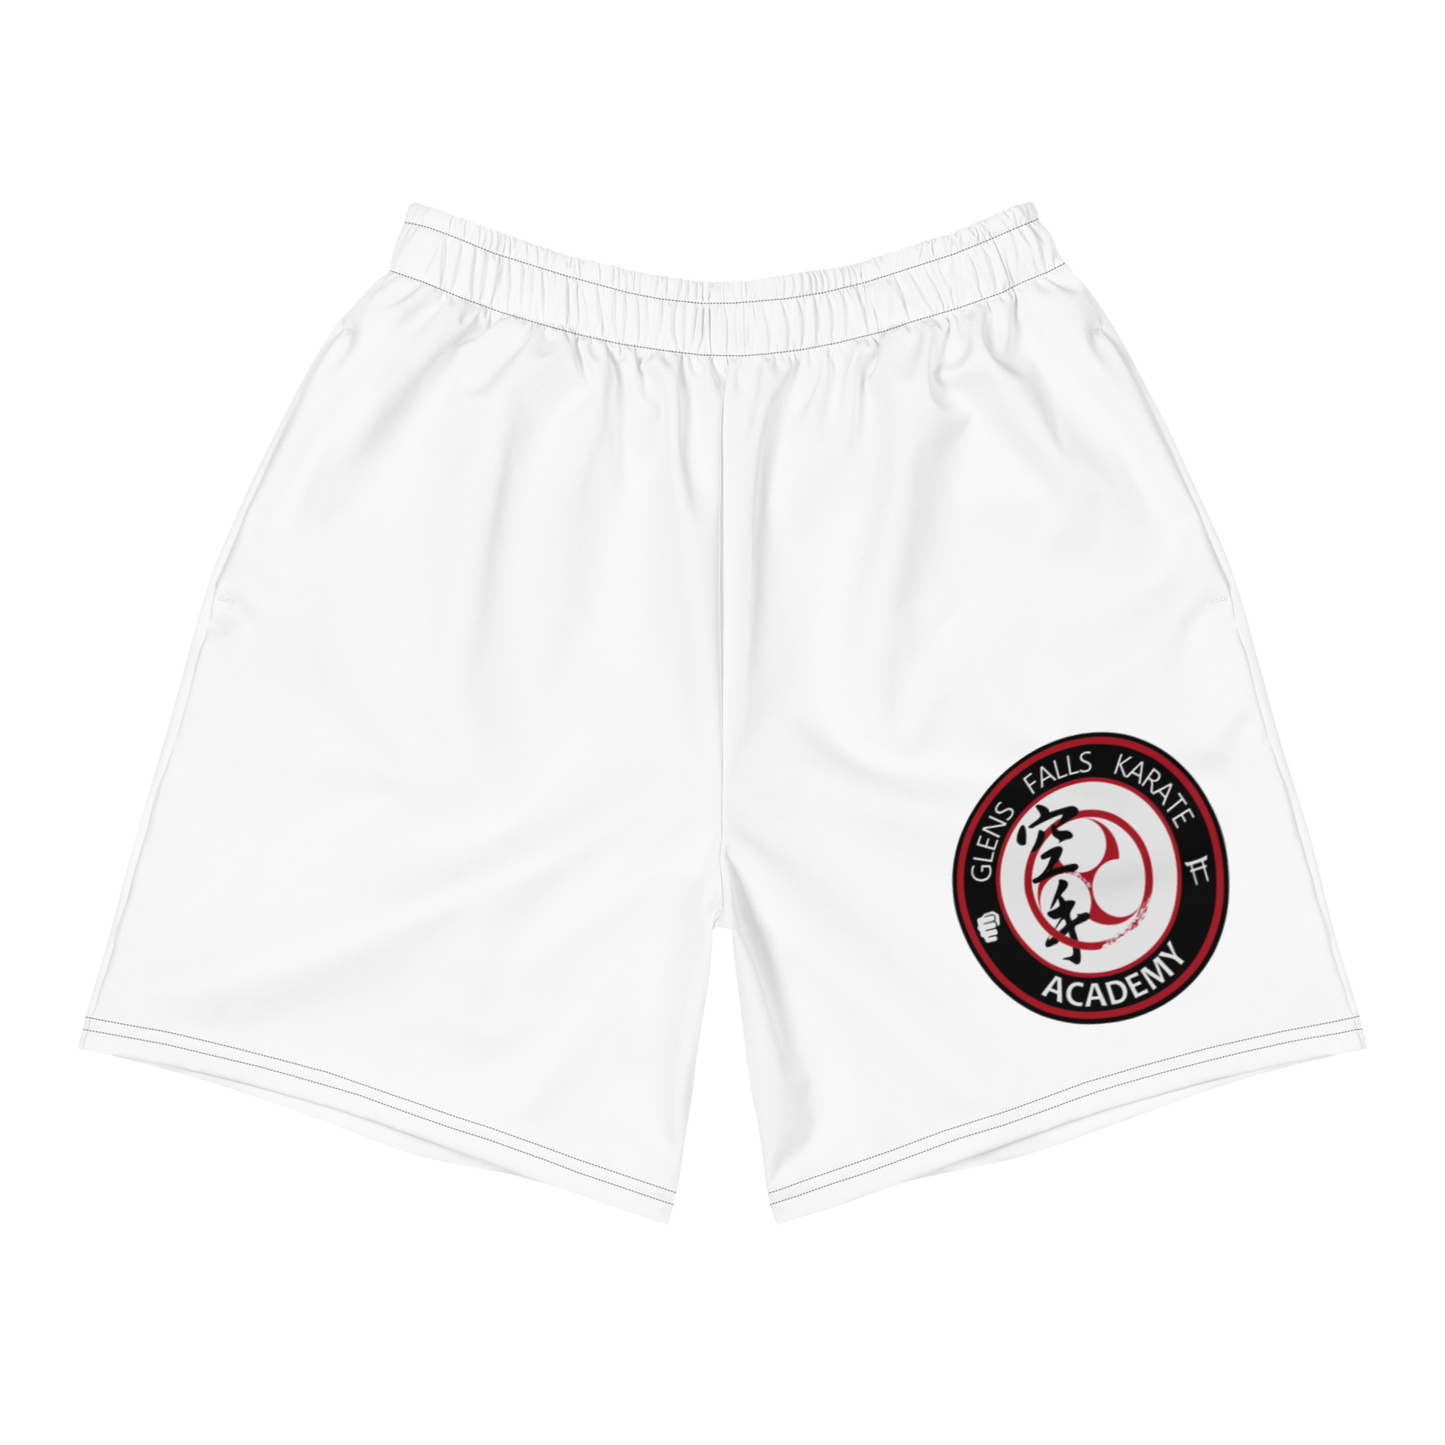 GFKA Athletic Shorts